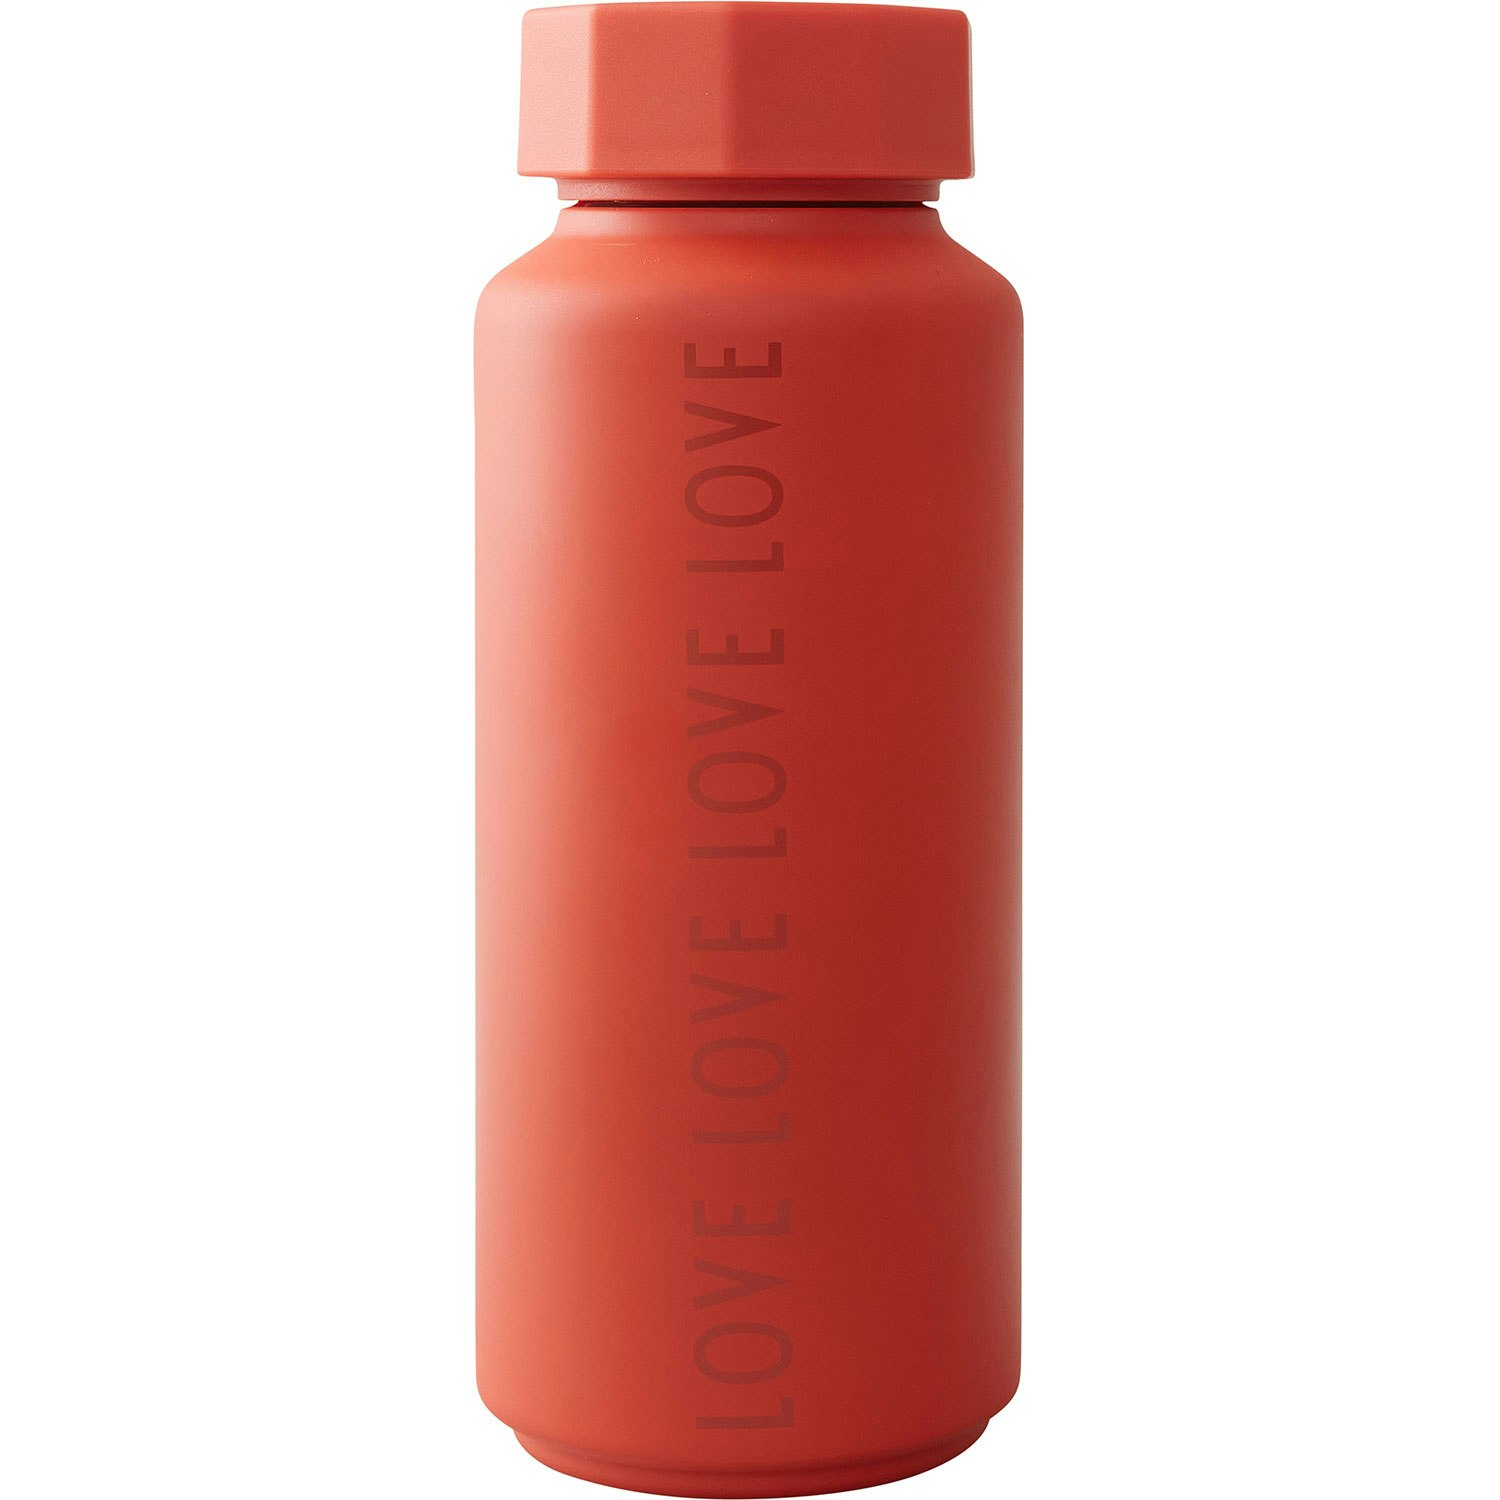 https://royaldesign.kr/image/9/design-letters-tone-on-tone-thermos-bottle-50-cl-19